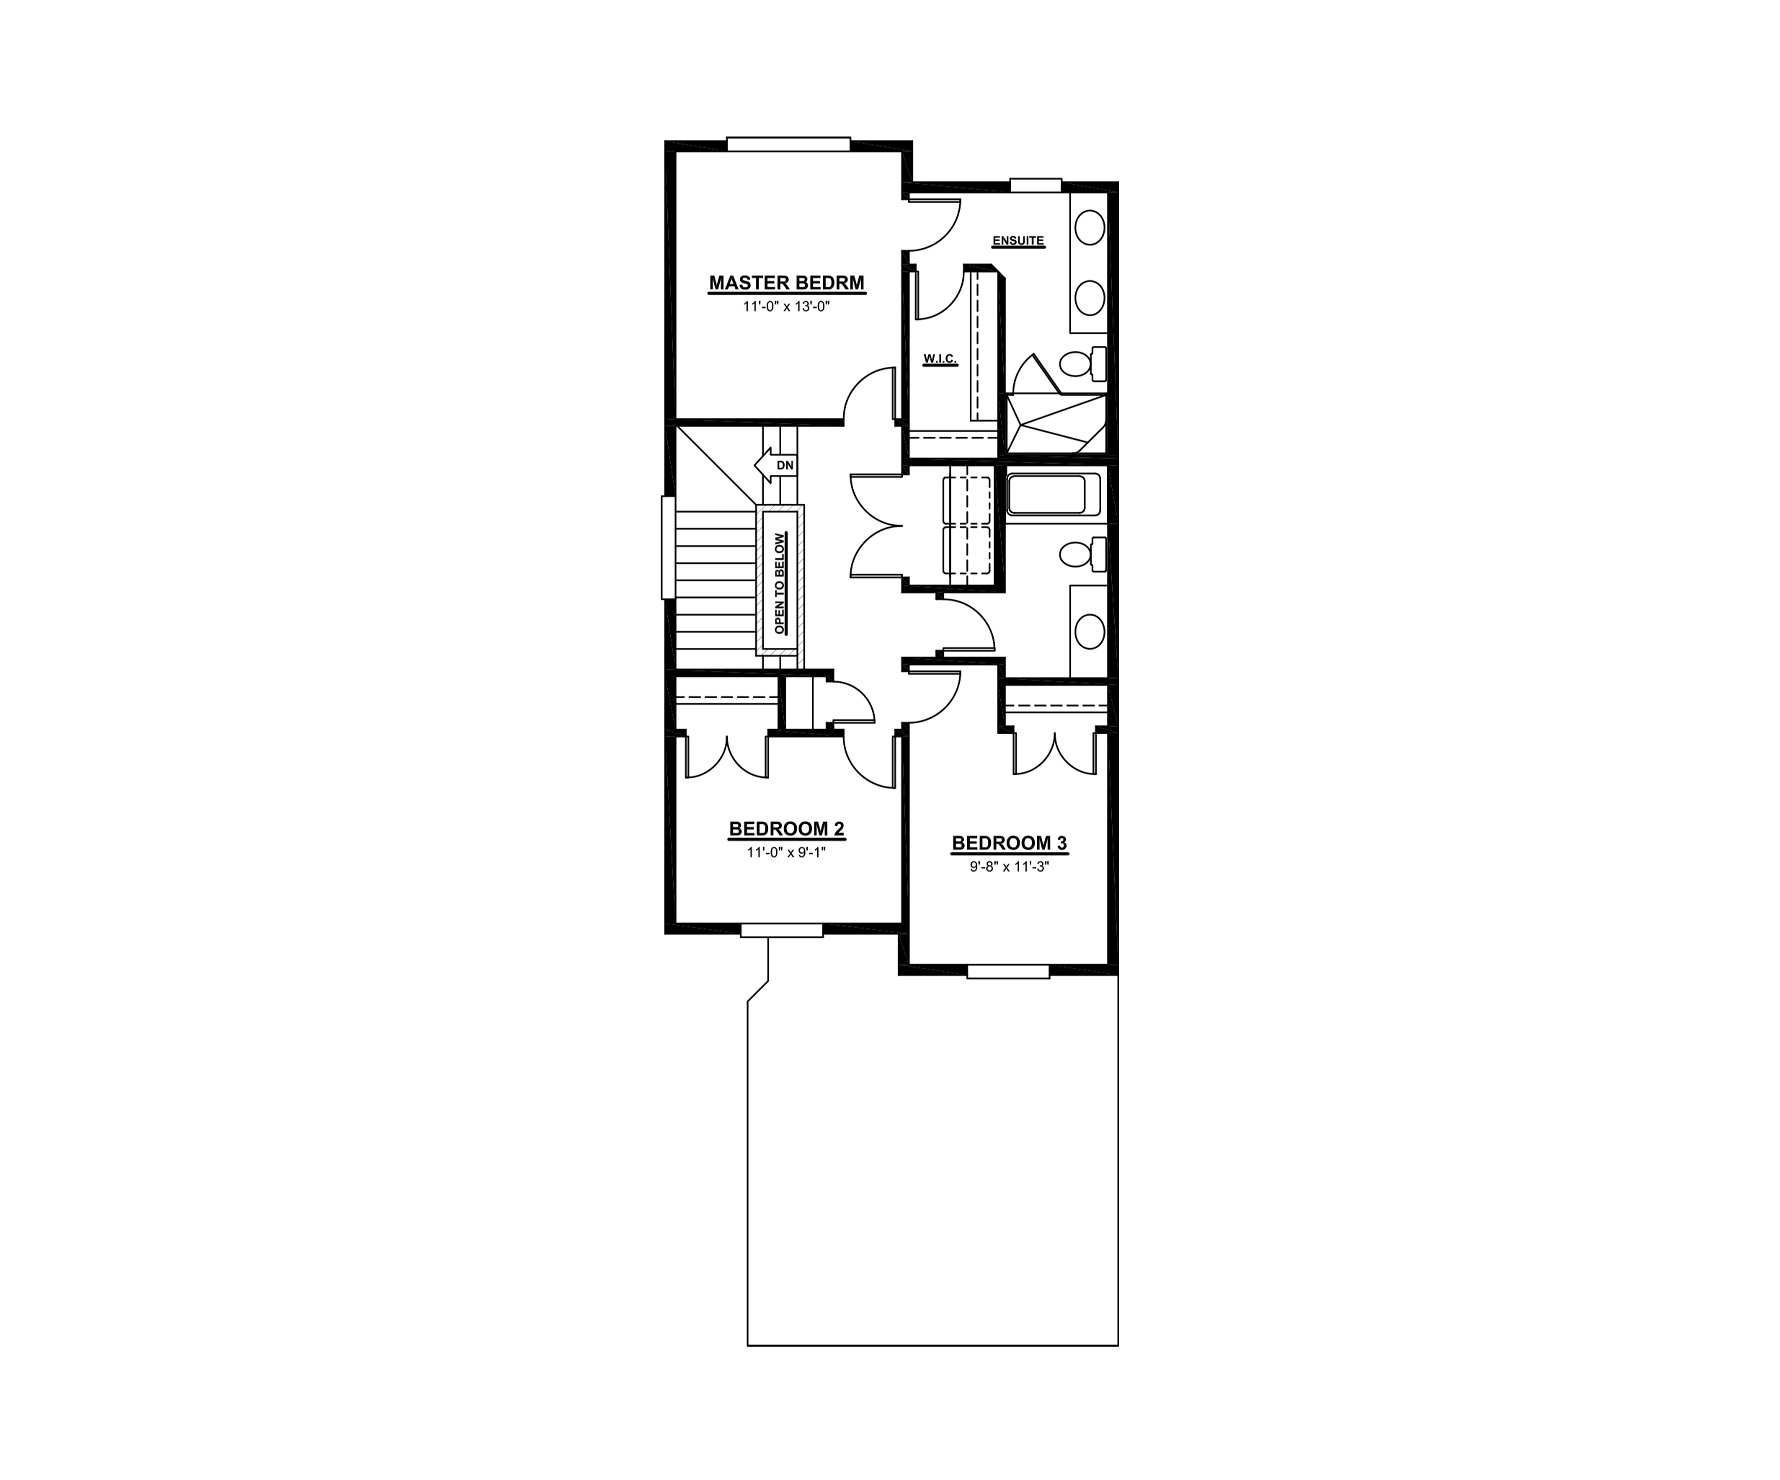 PRIMERA-Z Floor Plan of Crystallina Nera Daytona Homes with undefined beds